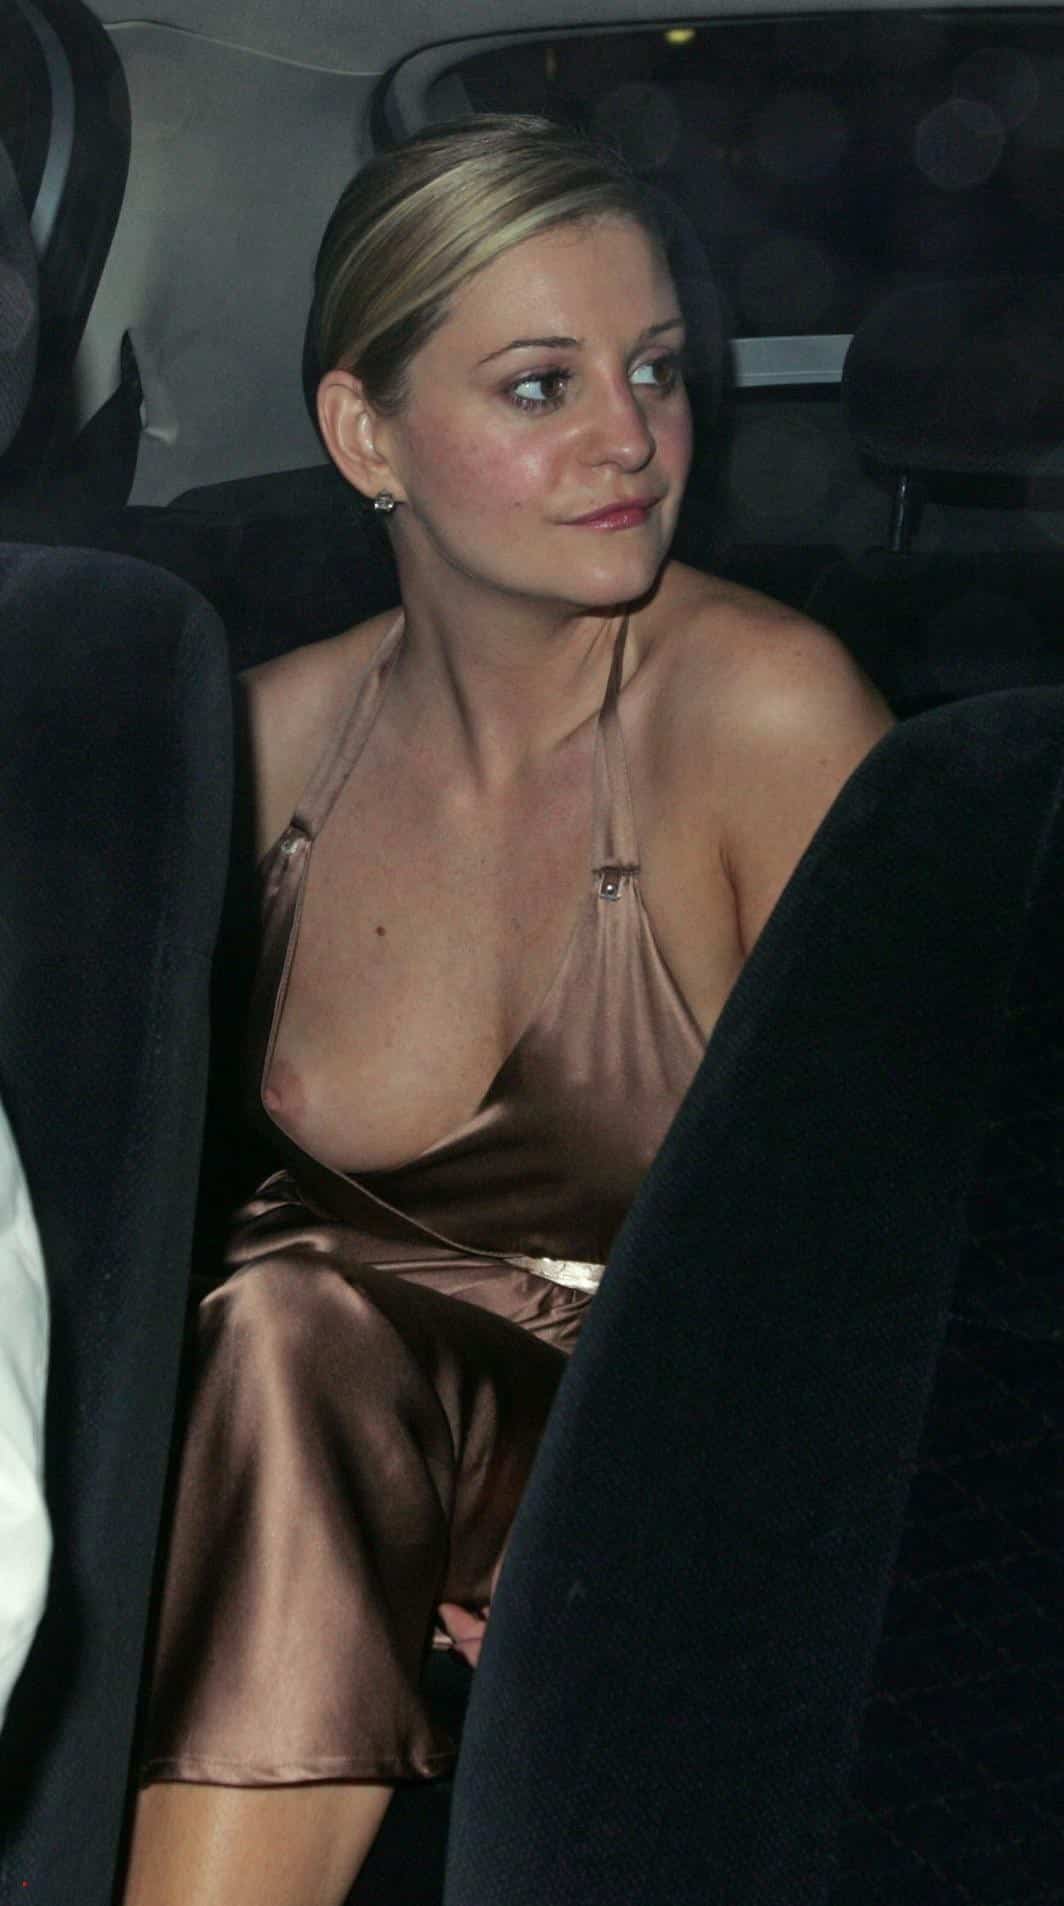 voyeur side boob nip slip boobs flash tits flashing from a festive dress